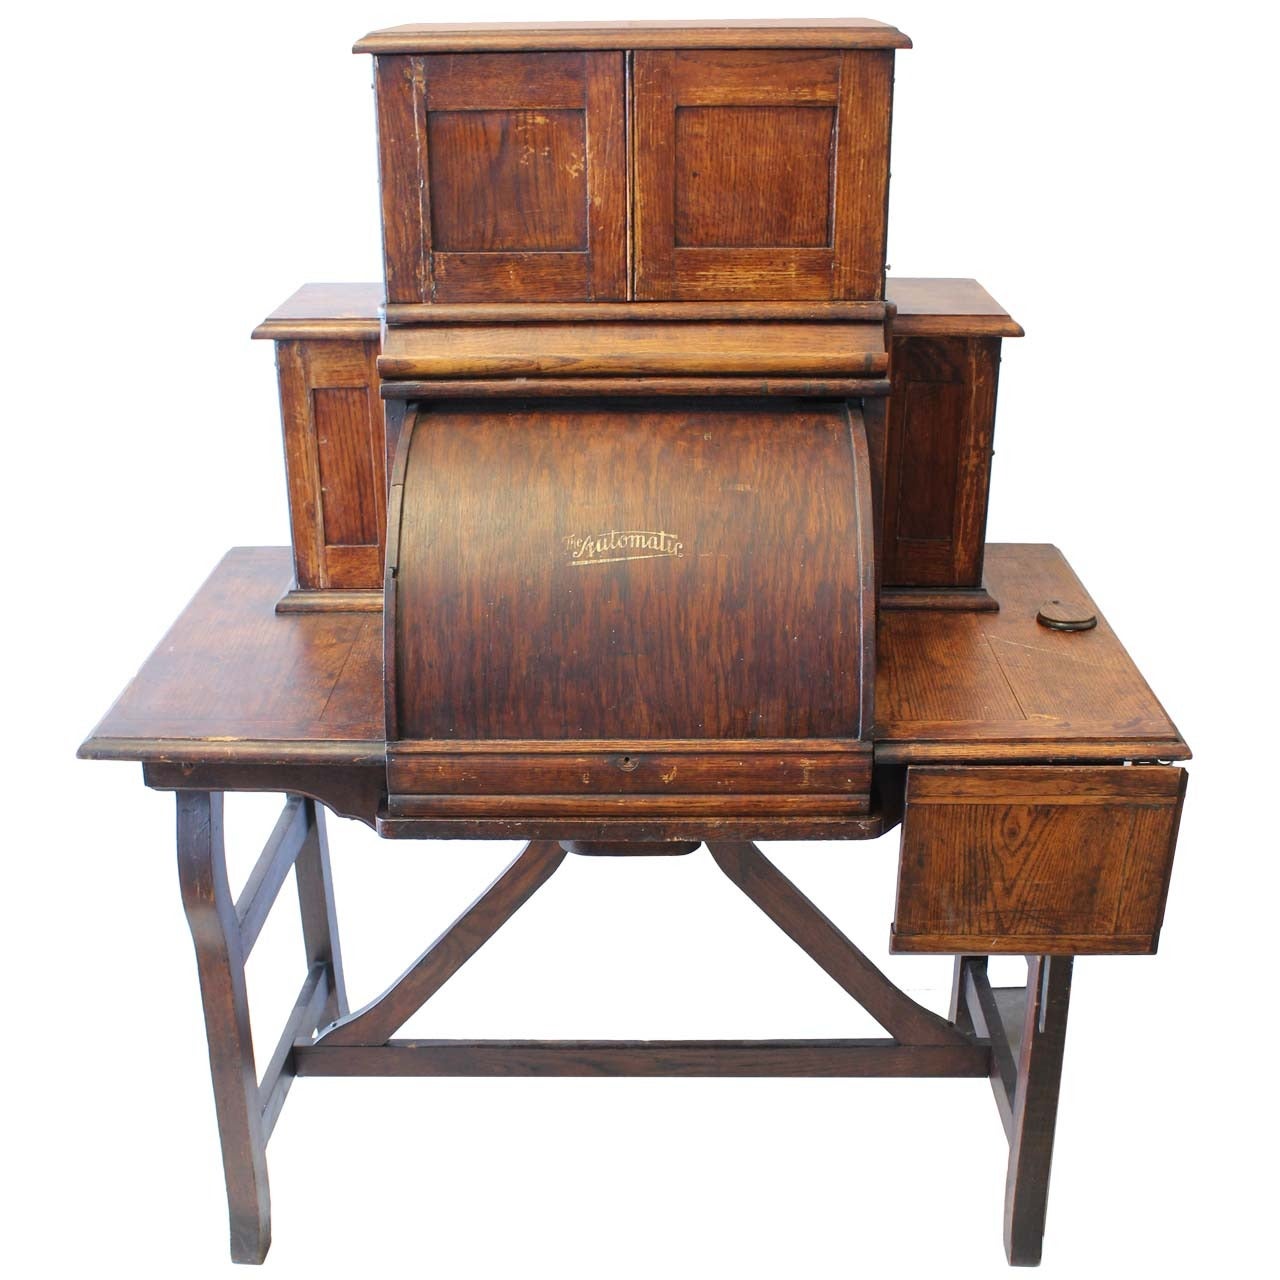 Rare Antique American Industrial Mechanical Desk For Sale